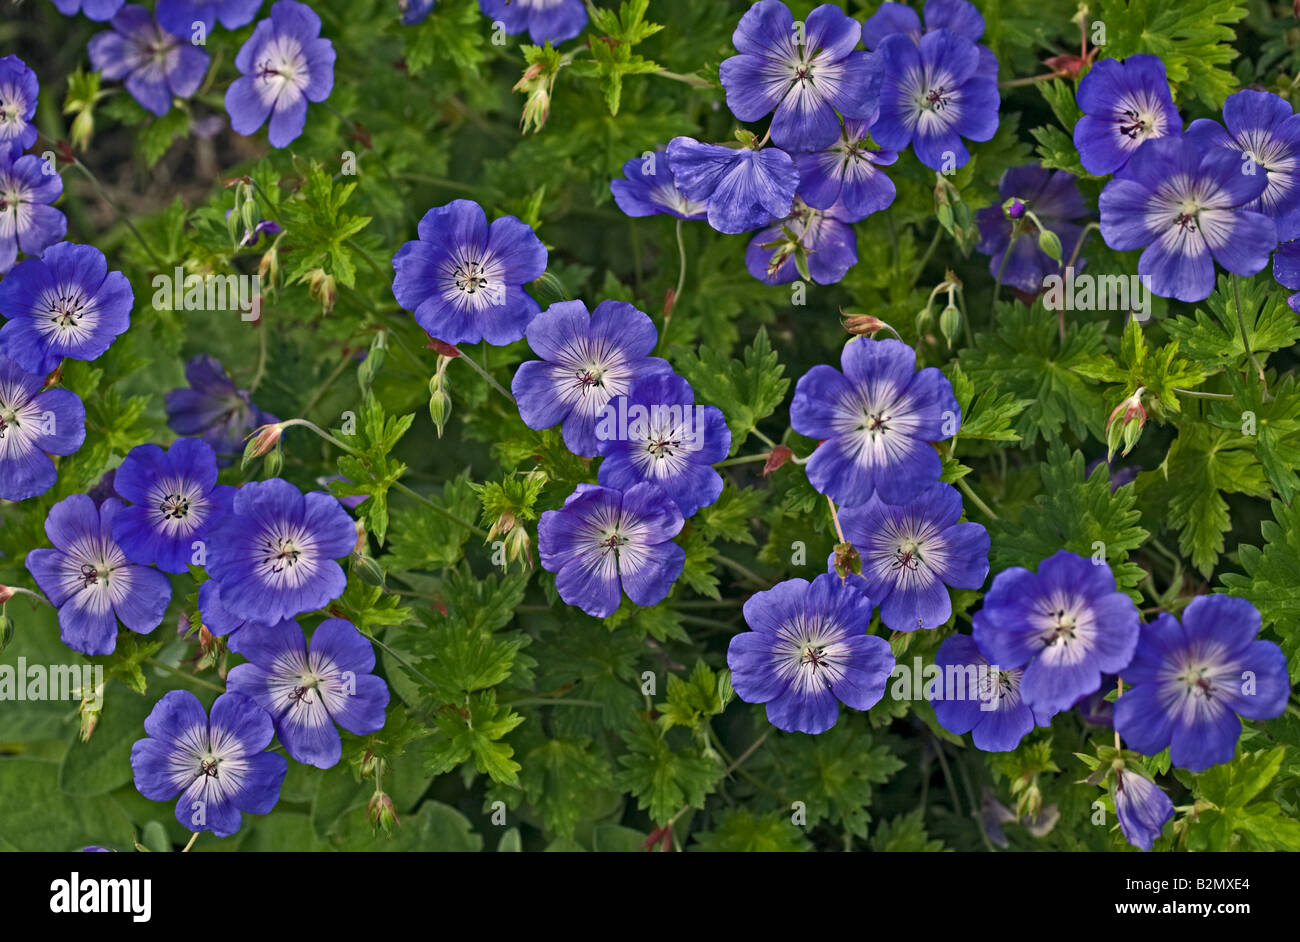 Sea of Blue Geranium flowers Stock Photo